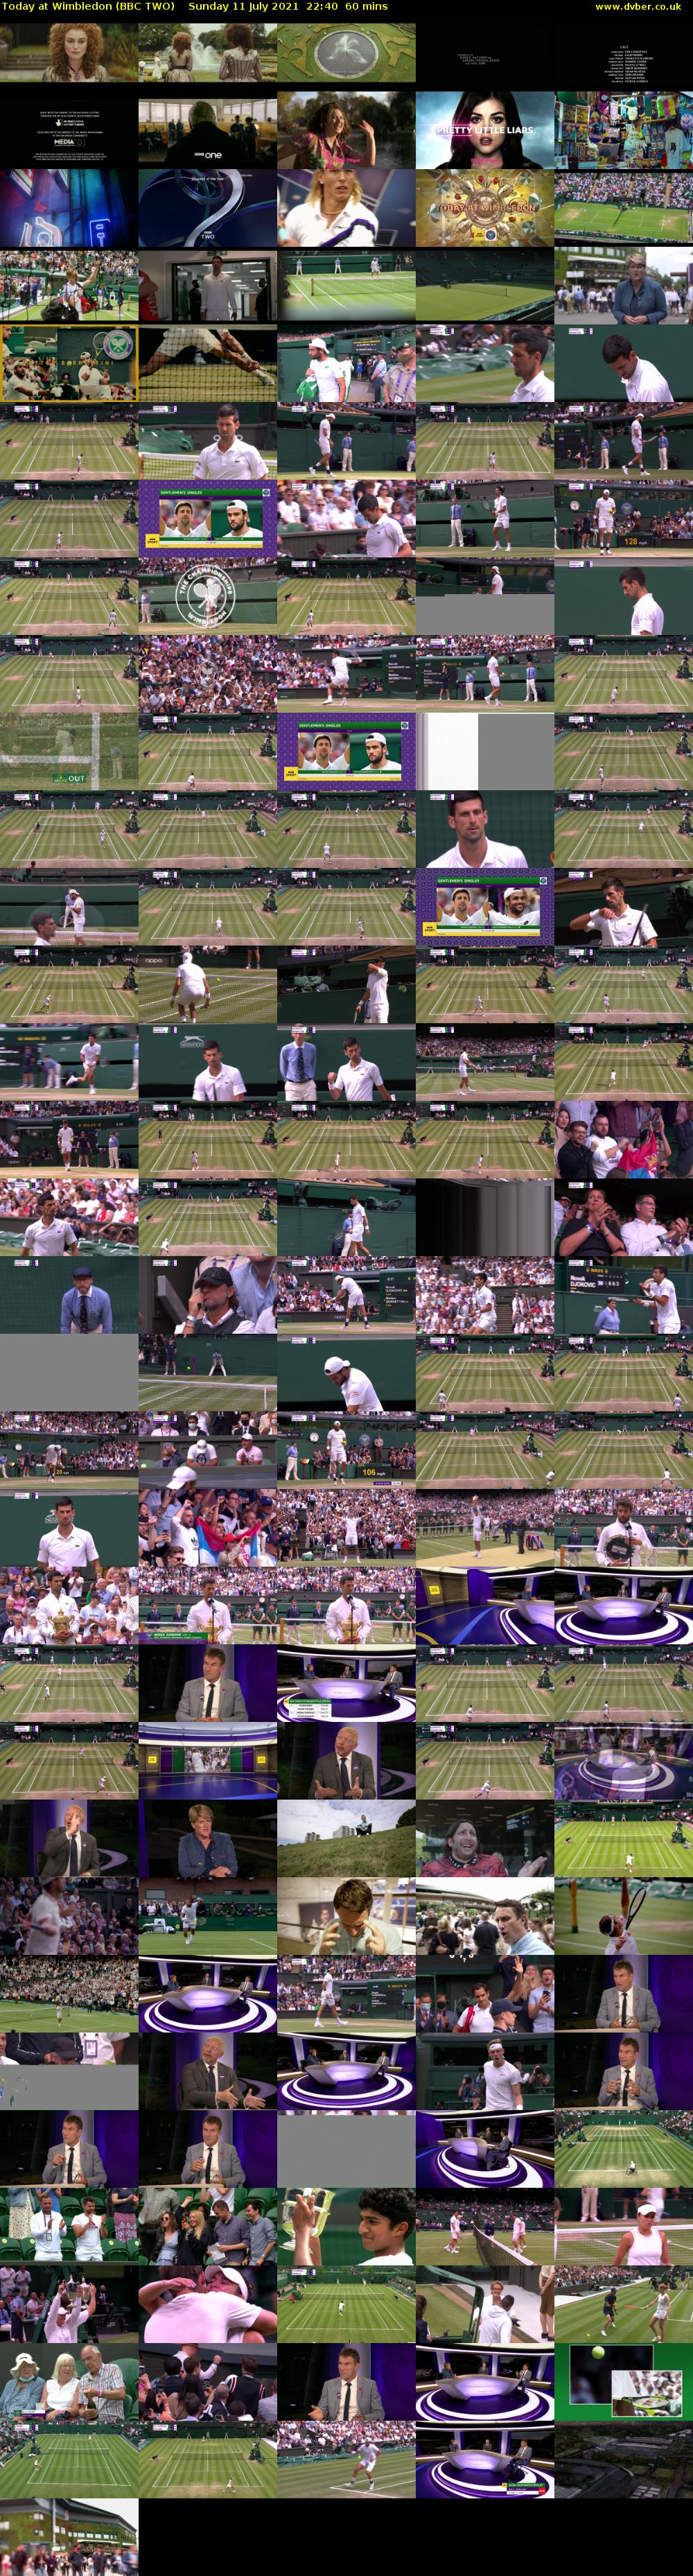 Today at Wimbledon (BBC TWO) Sunday 11 July 2021 22:40 - 23:40